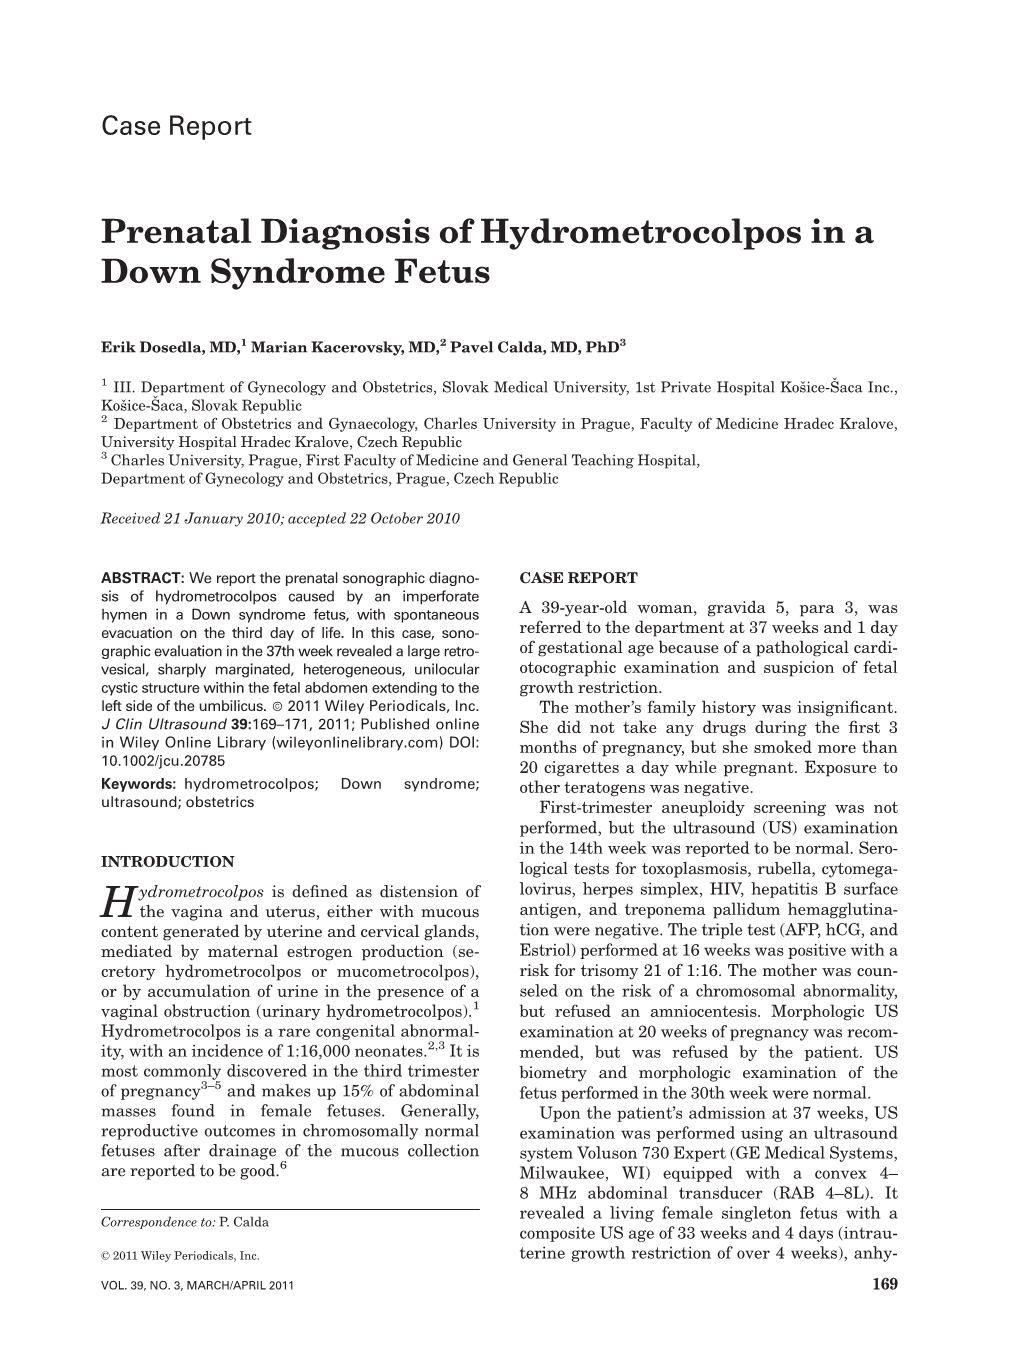 Prenatal Diagnosis of Hydrometrocolpos in a Down Syndrome Fetus